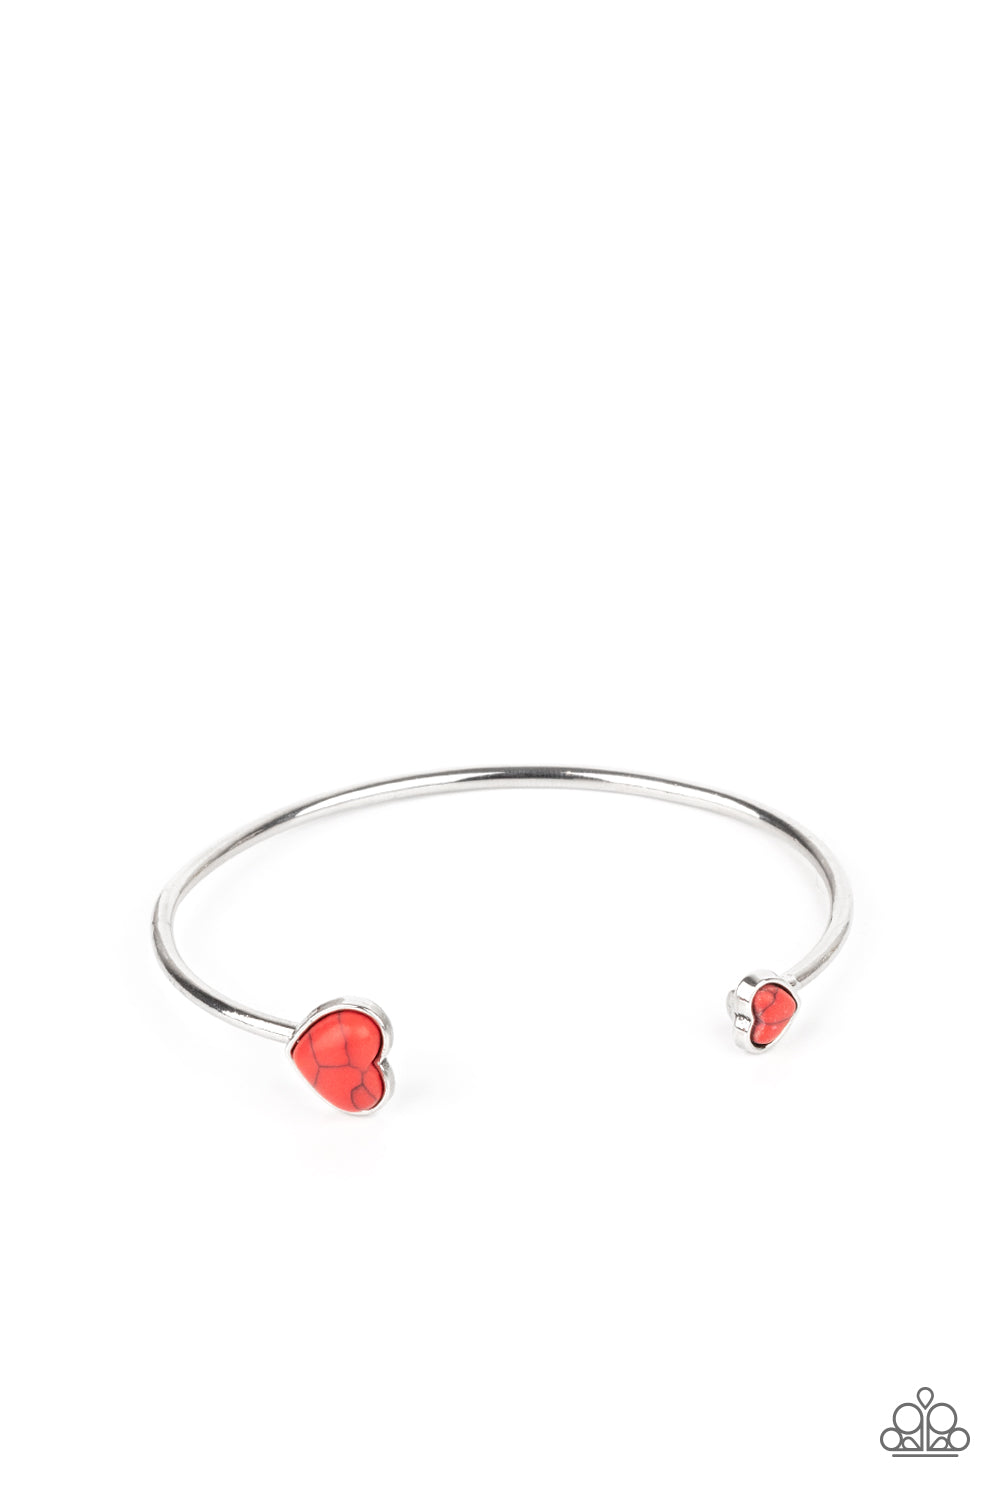 Romantically Rustic - Red Cuff Bracelet